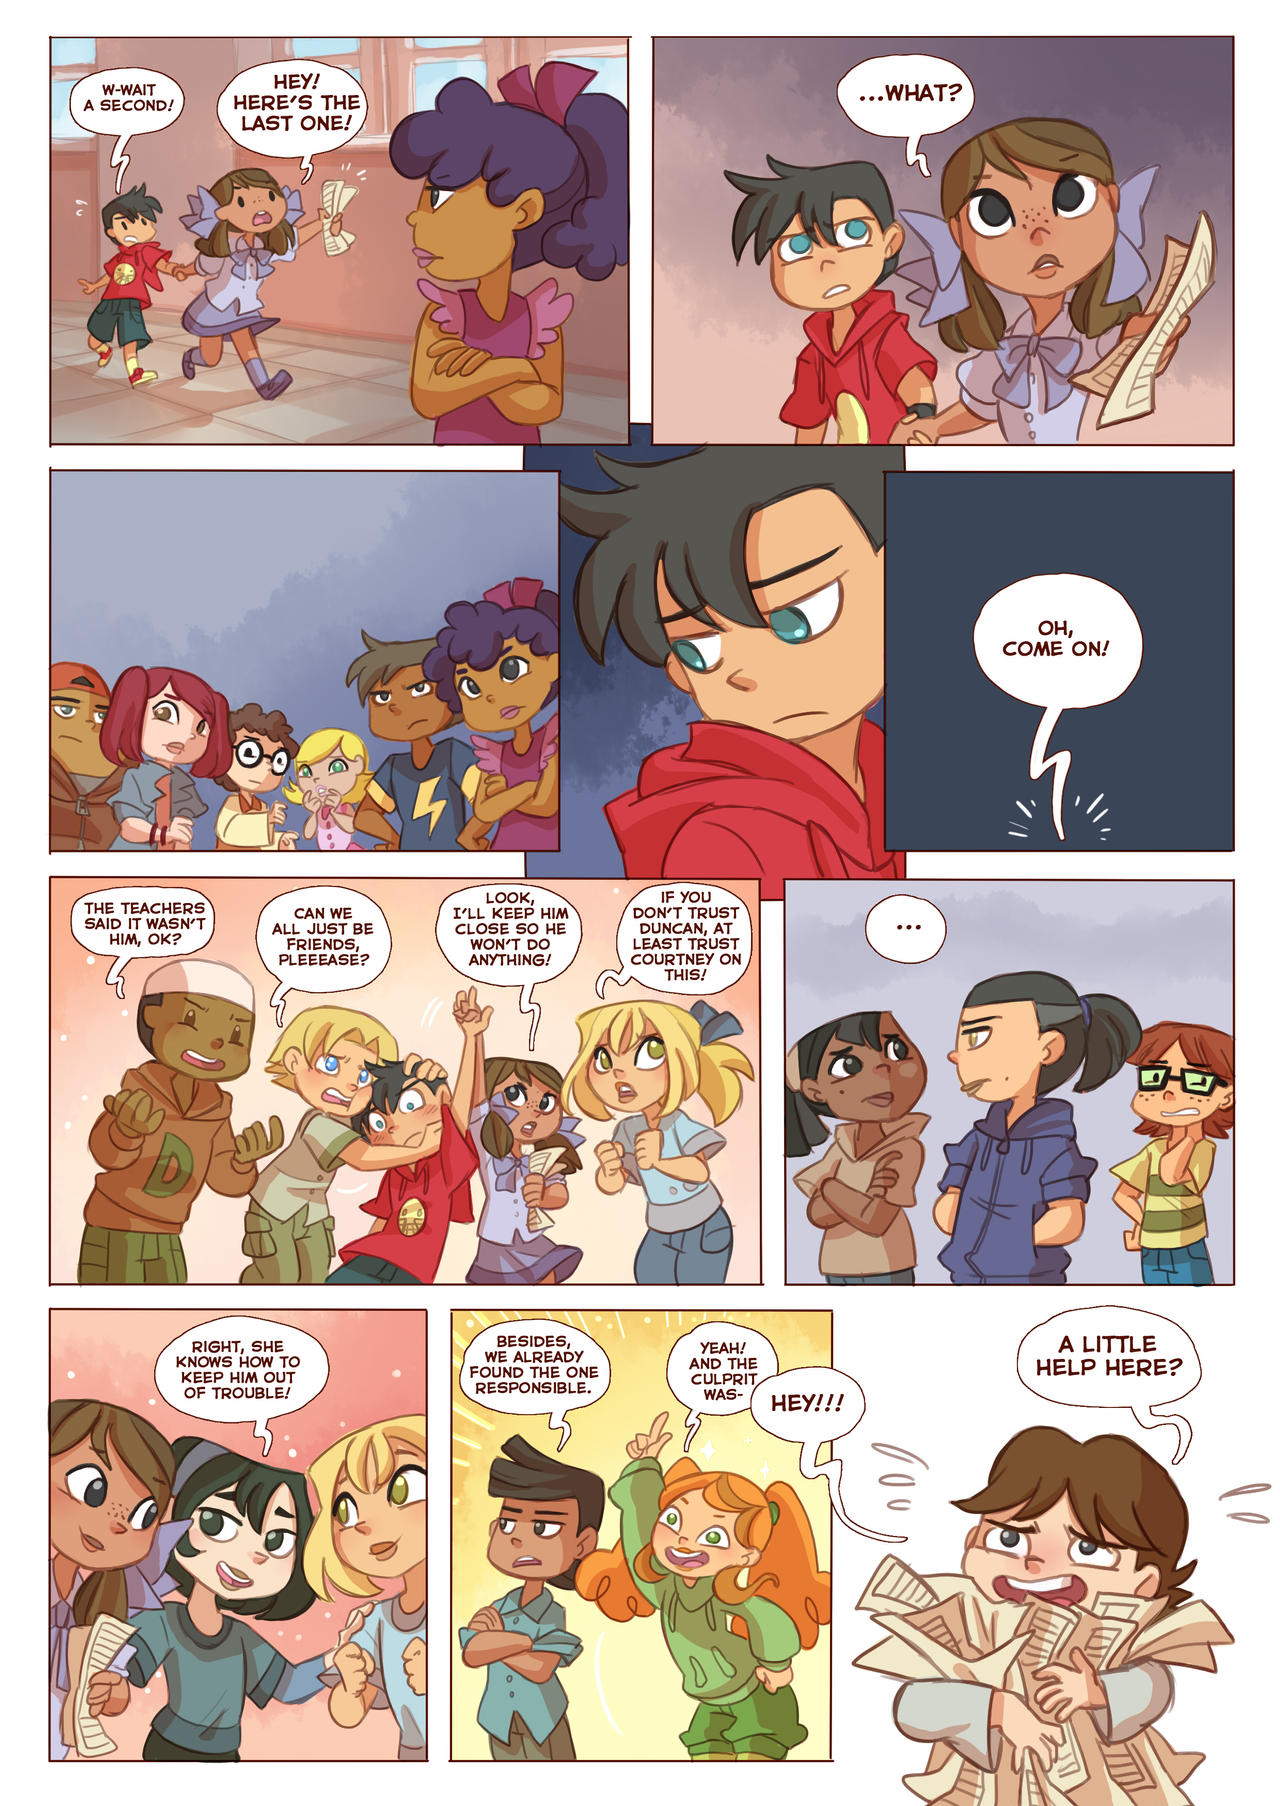 Total Drama Kids Comic: Page 21 - L'Île des défis extrêmes fan Art  (37573109) - fanpop